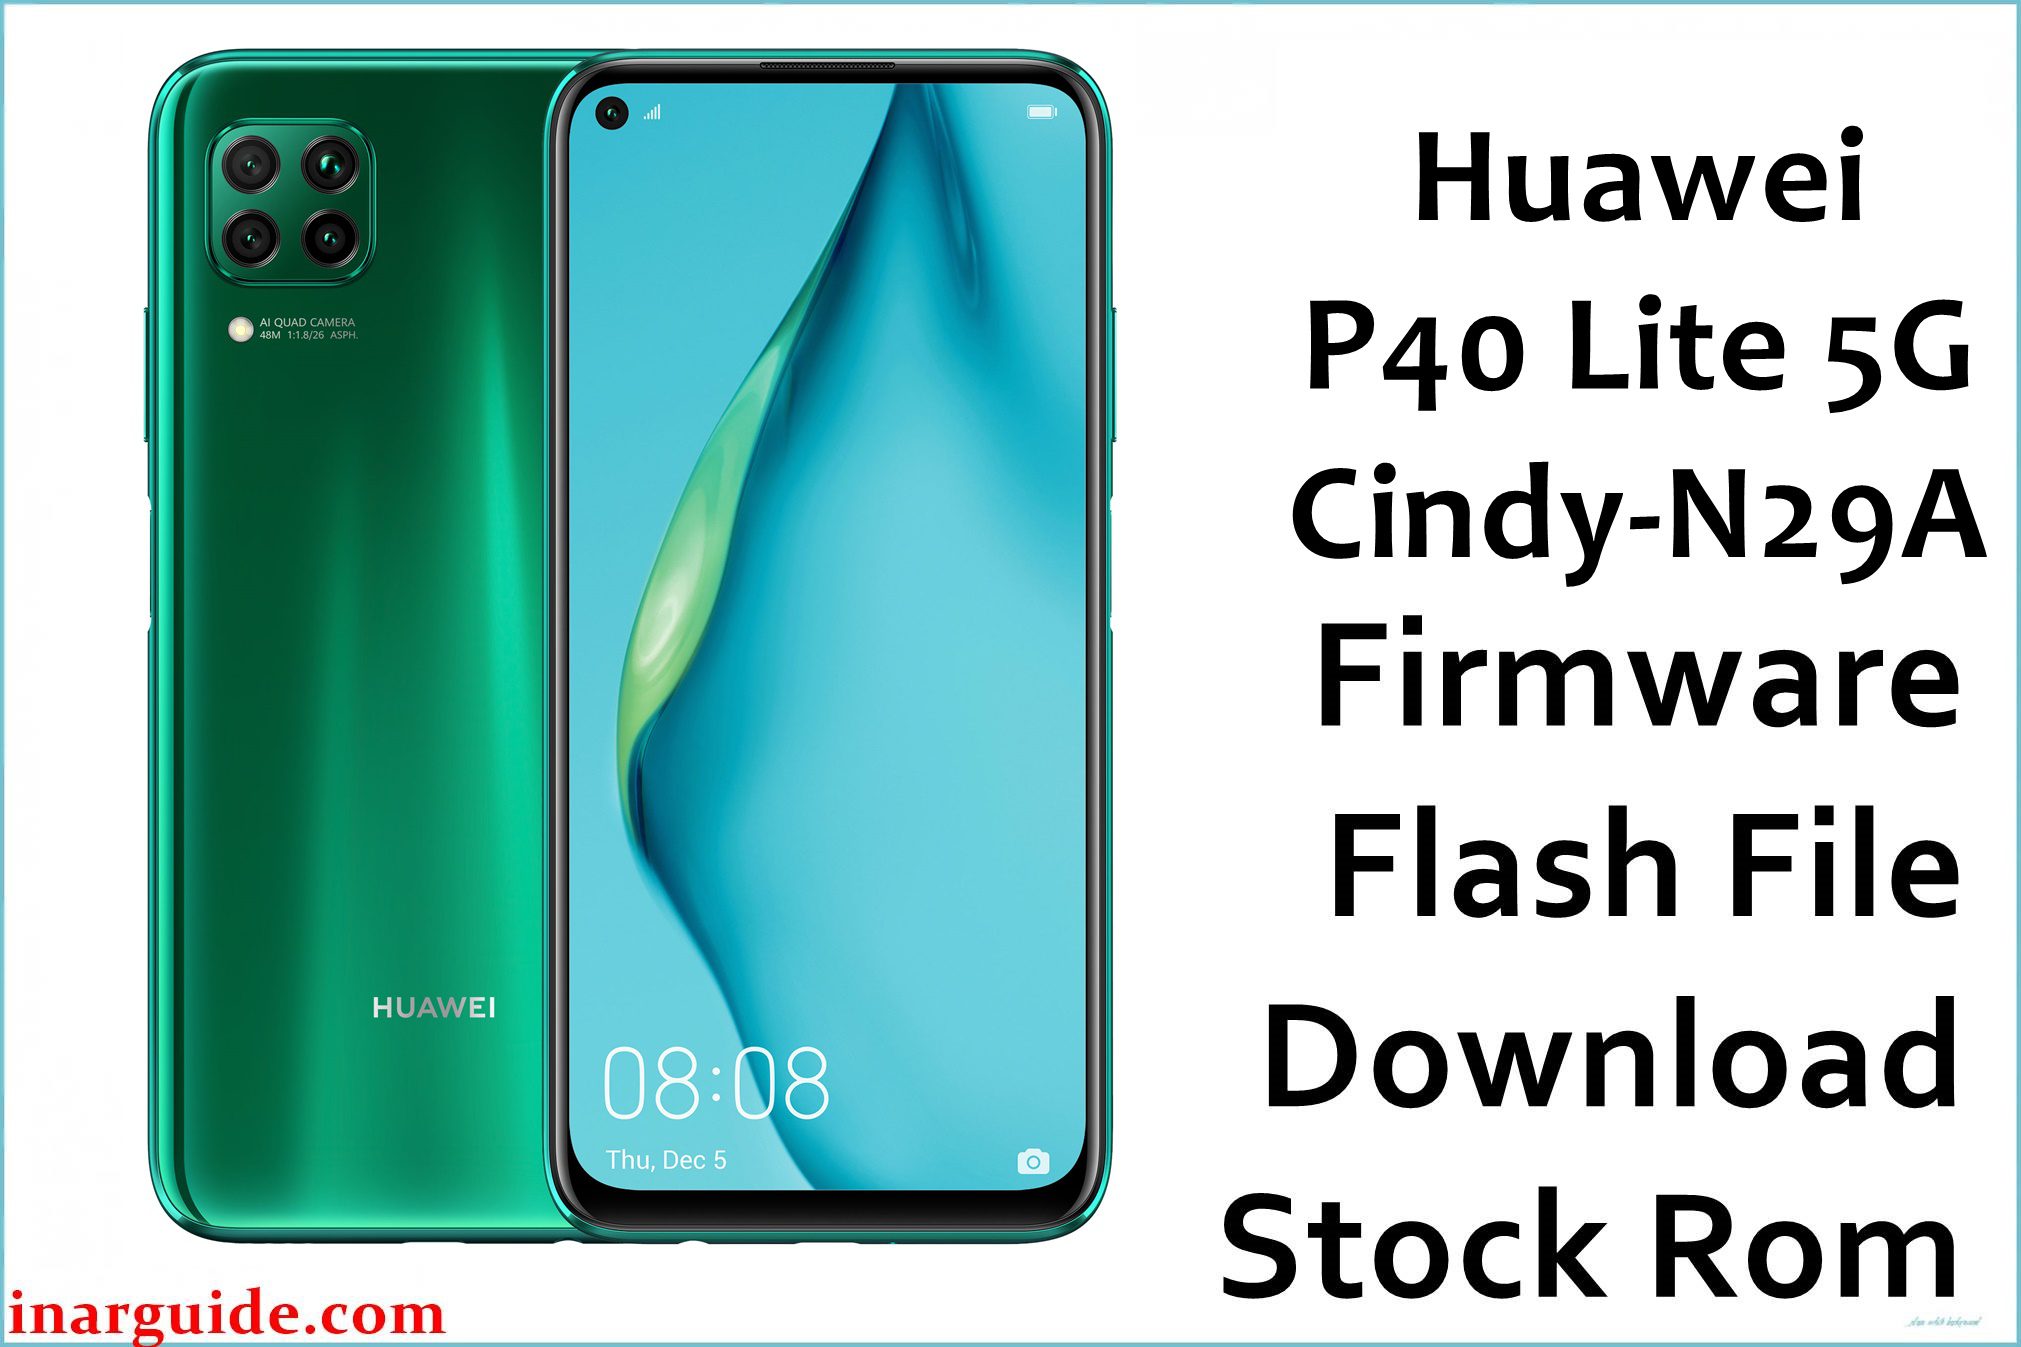 Huawei P40 Lite 5G Cindy N29A